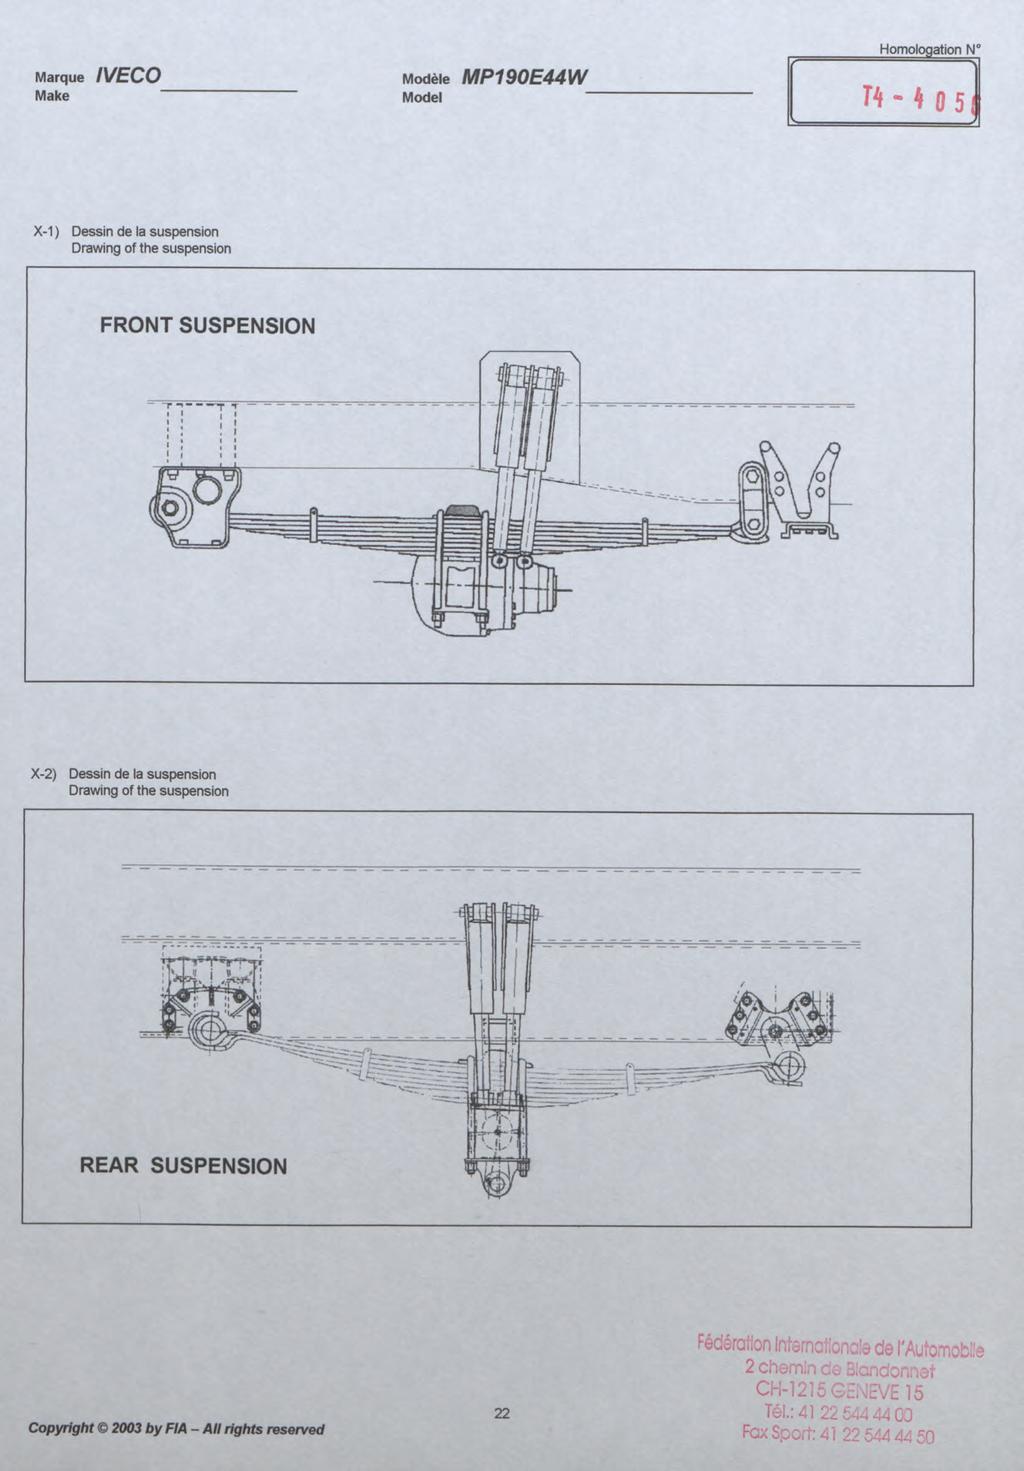 Mode! X-1 ) Dessin de la suspension Drawing of the suspension FRONT SUSPENSION E- X-2) Dessin de la suspension Drawing of the suspension REAR SUSPENSION Copyright